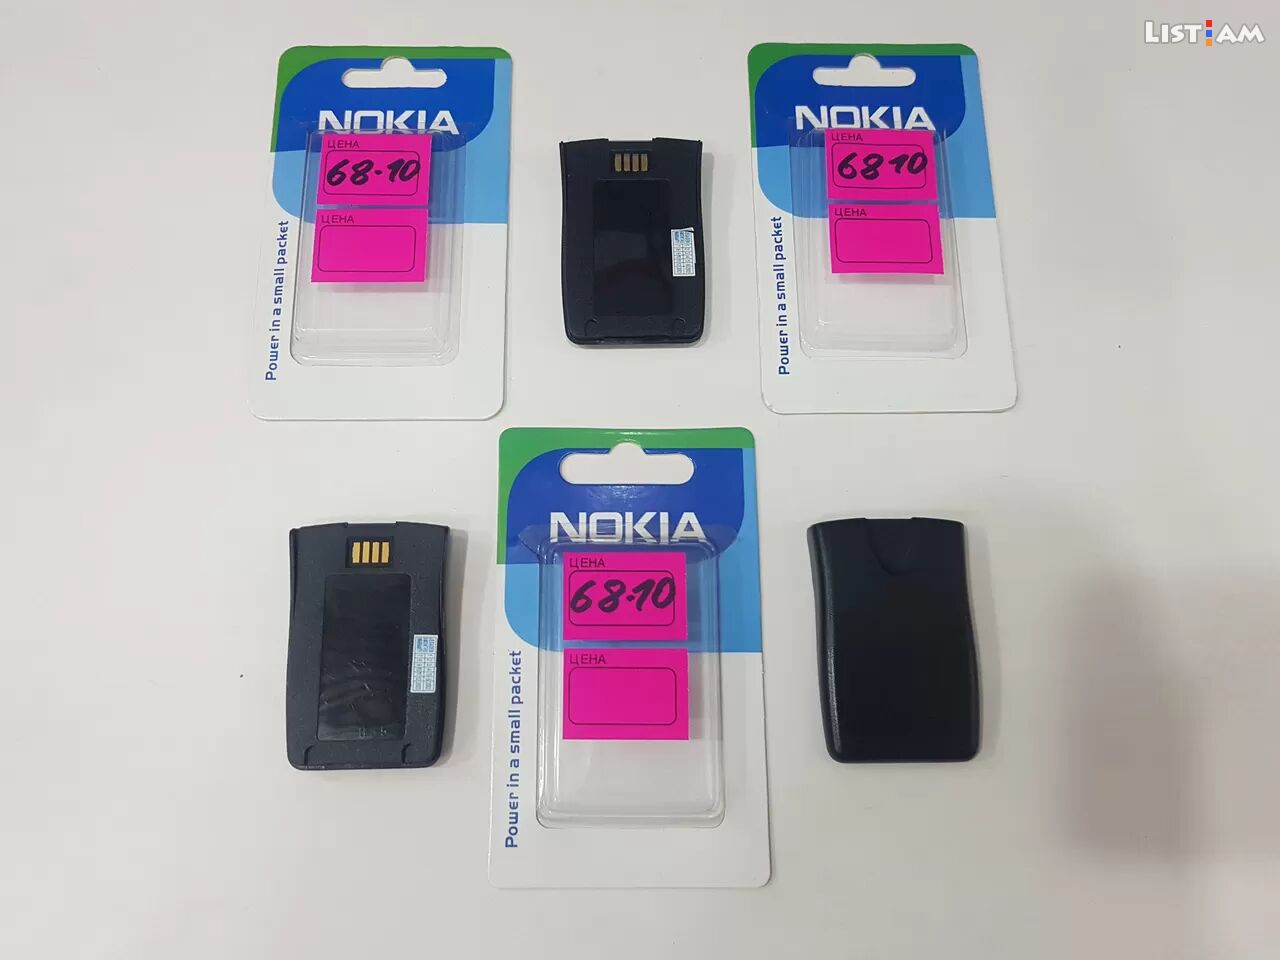 Nokia 6810 battery